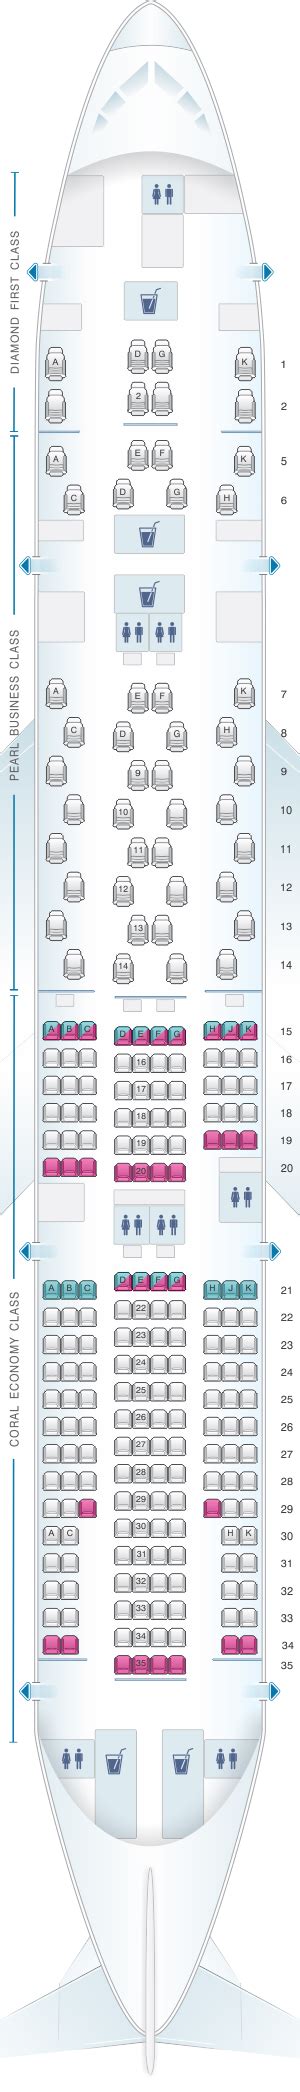 Etihad Boeing 777 300er Business Cl Seat Map Tutorial Pics